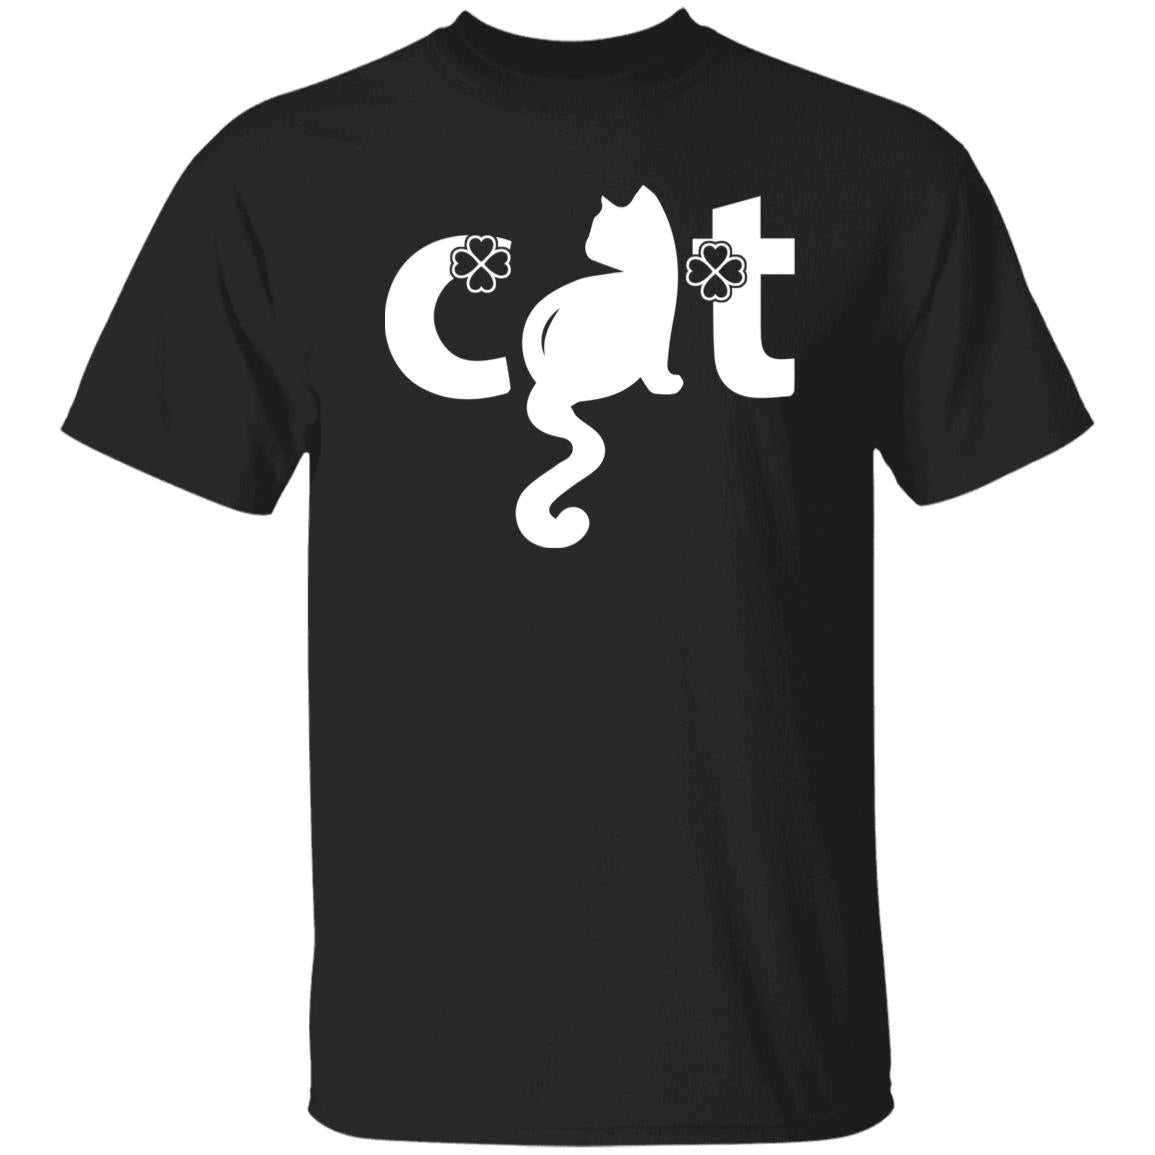 Funny Cat Text Unisex shirt cute cat tee Black Dark Heather-Family-Gift-Planet